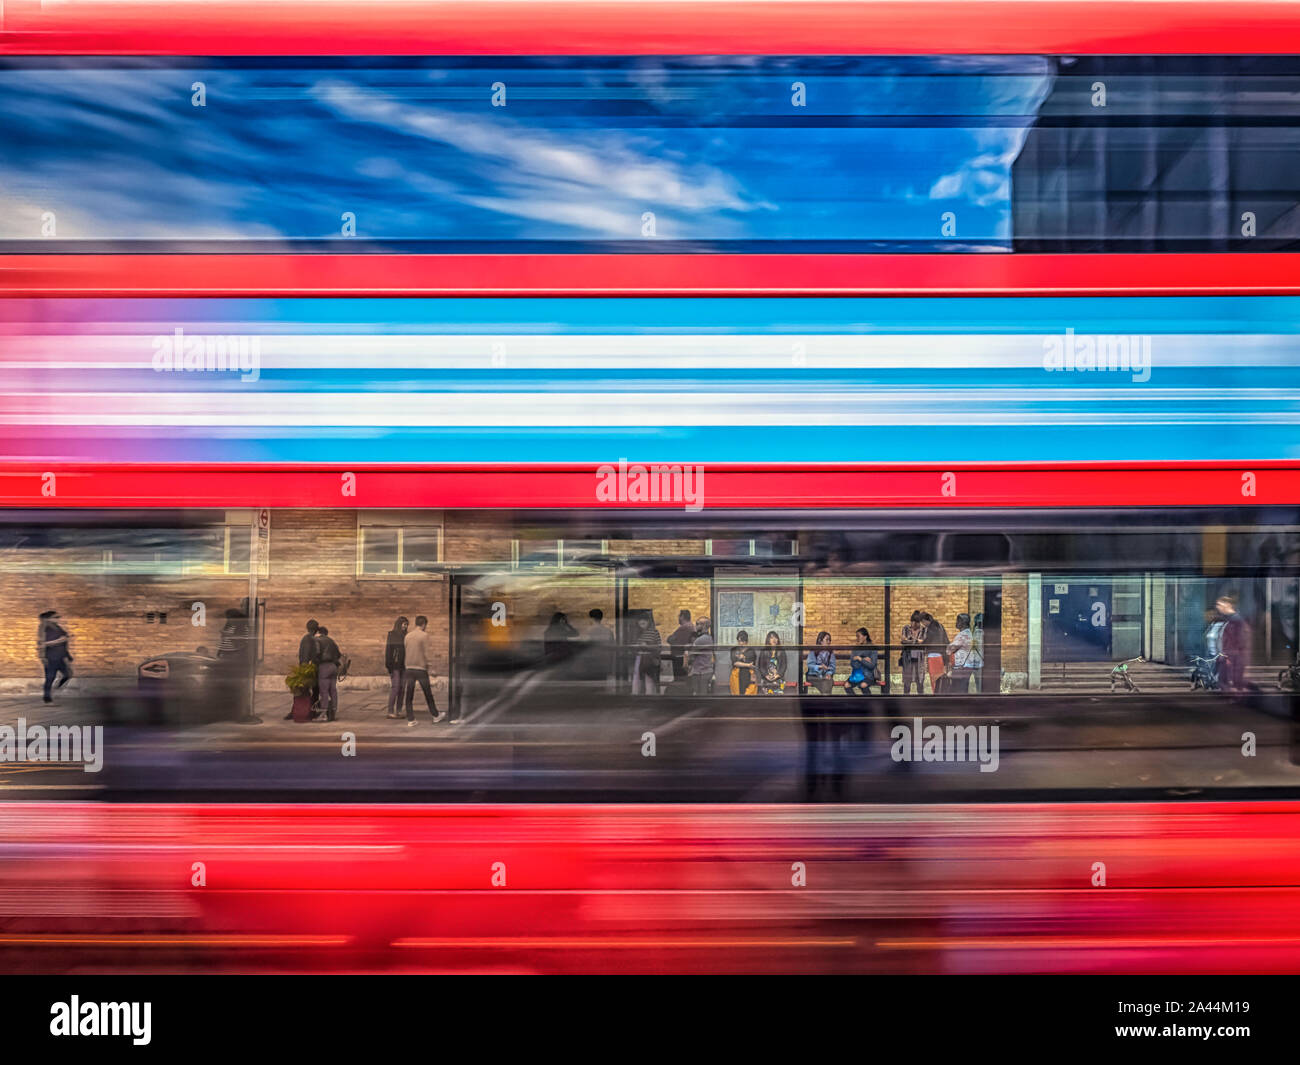 London Red Bus, Bushaltestelle, ein abstraktes Bild Stockfoto